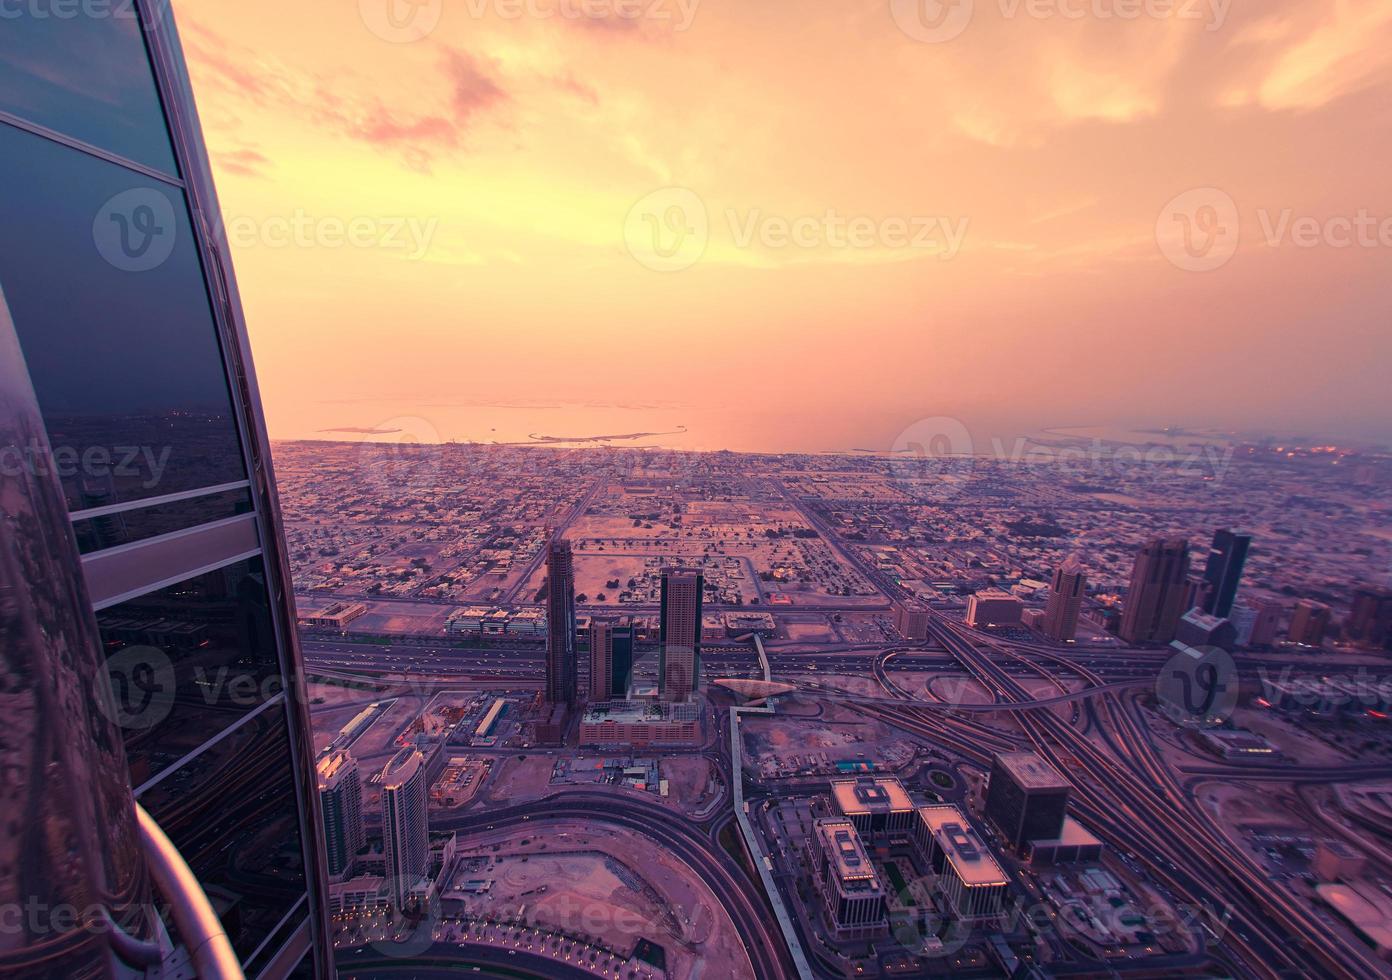 Dubai downtown visie foto